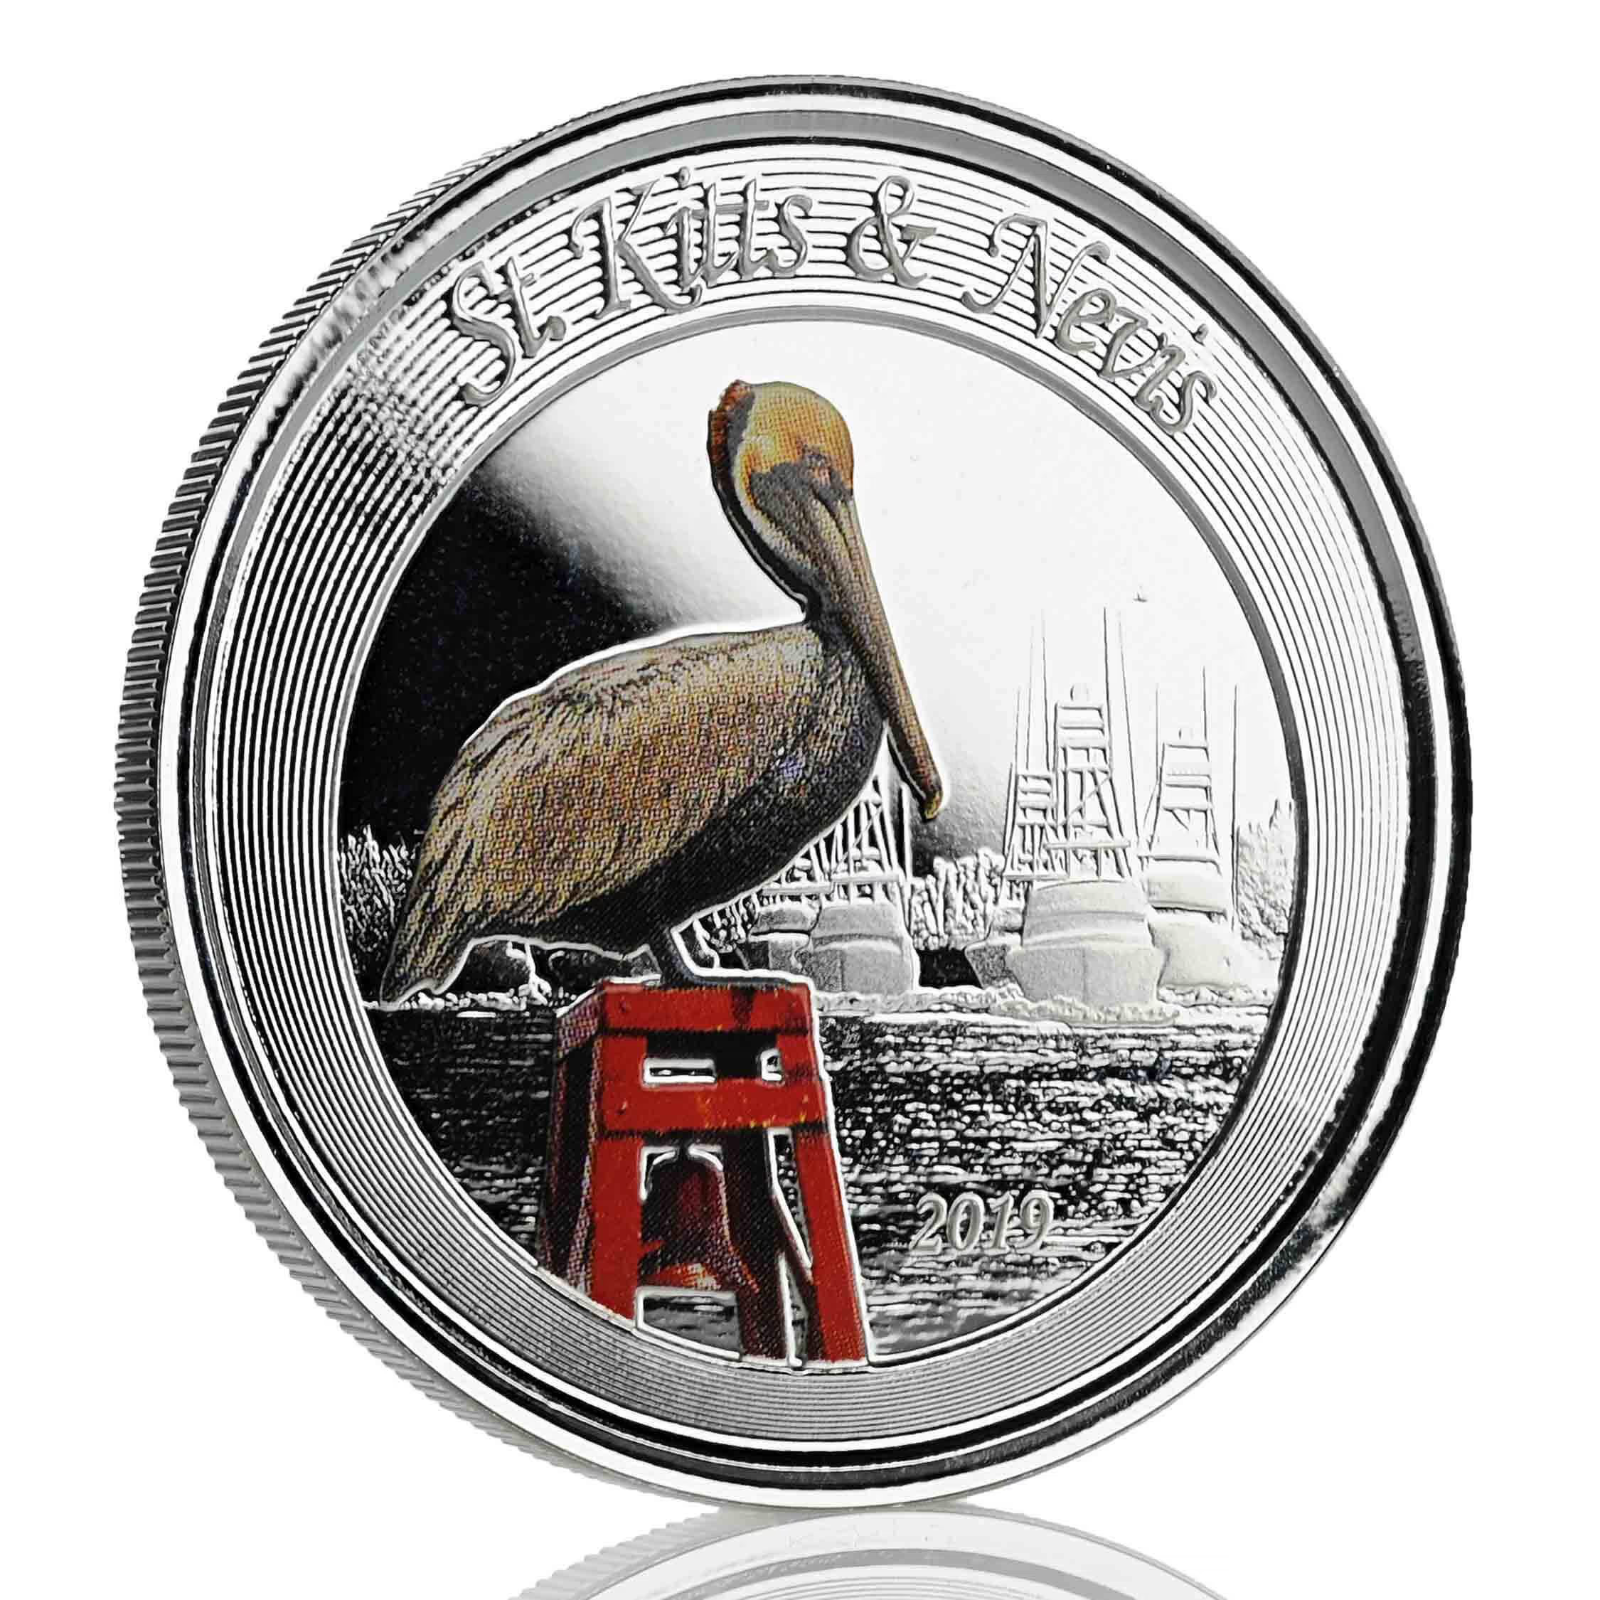 1 Oz Silver Coin 2019 EC8 Saint Kitts & Nevis $2 Color Proof - Brown Pelican-classypw.com-1